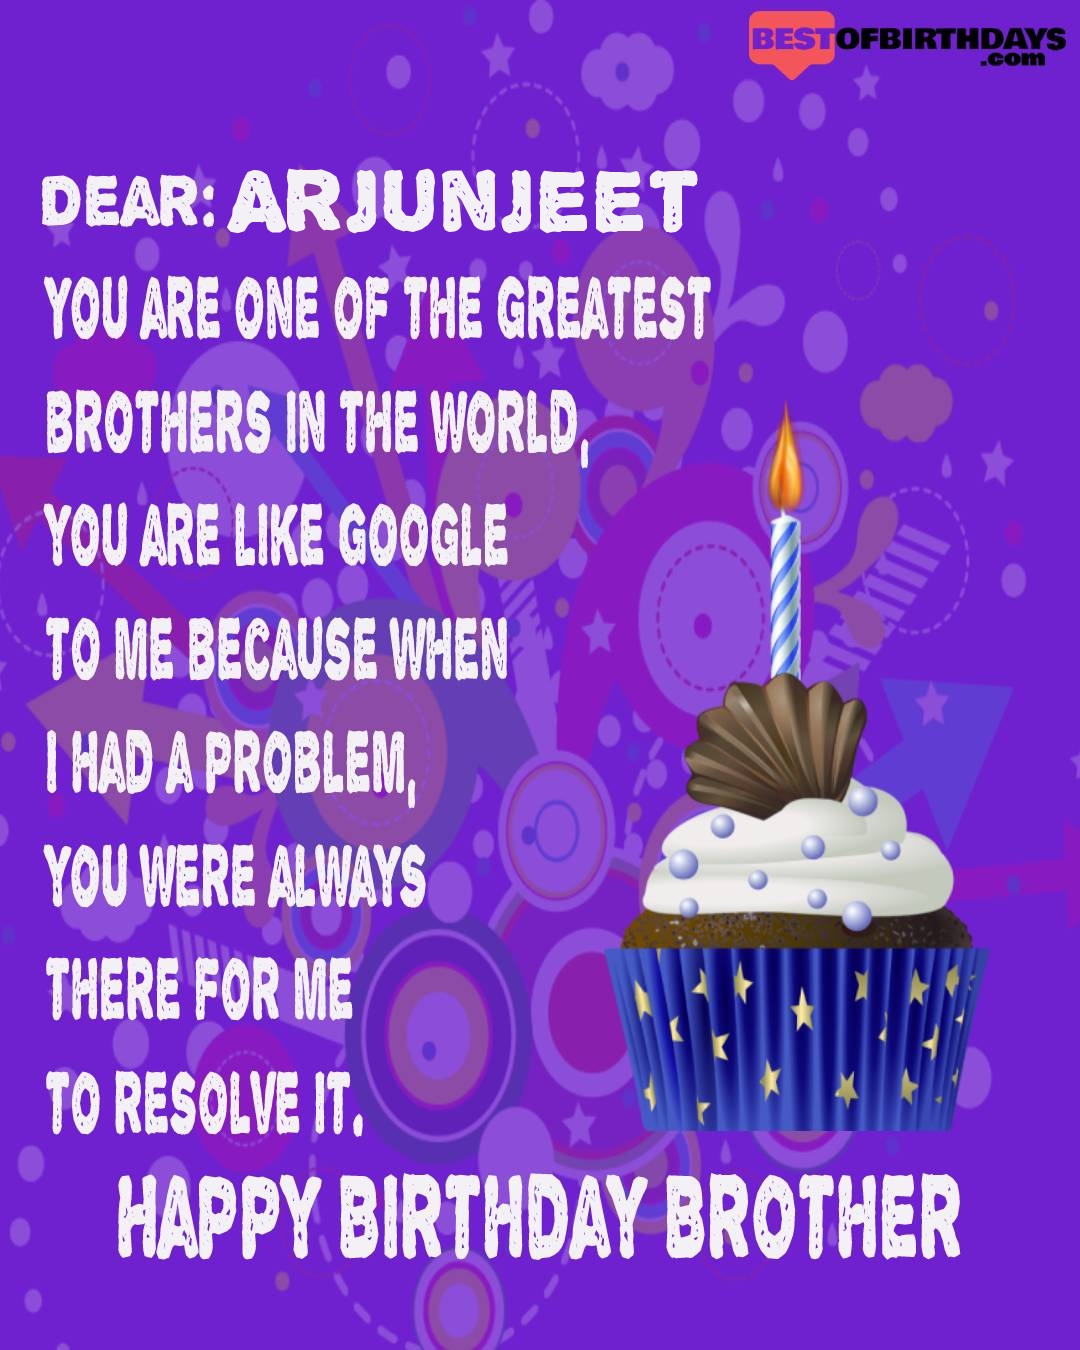 Happy birthday arjunjeet bhai brother bro